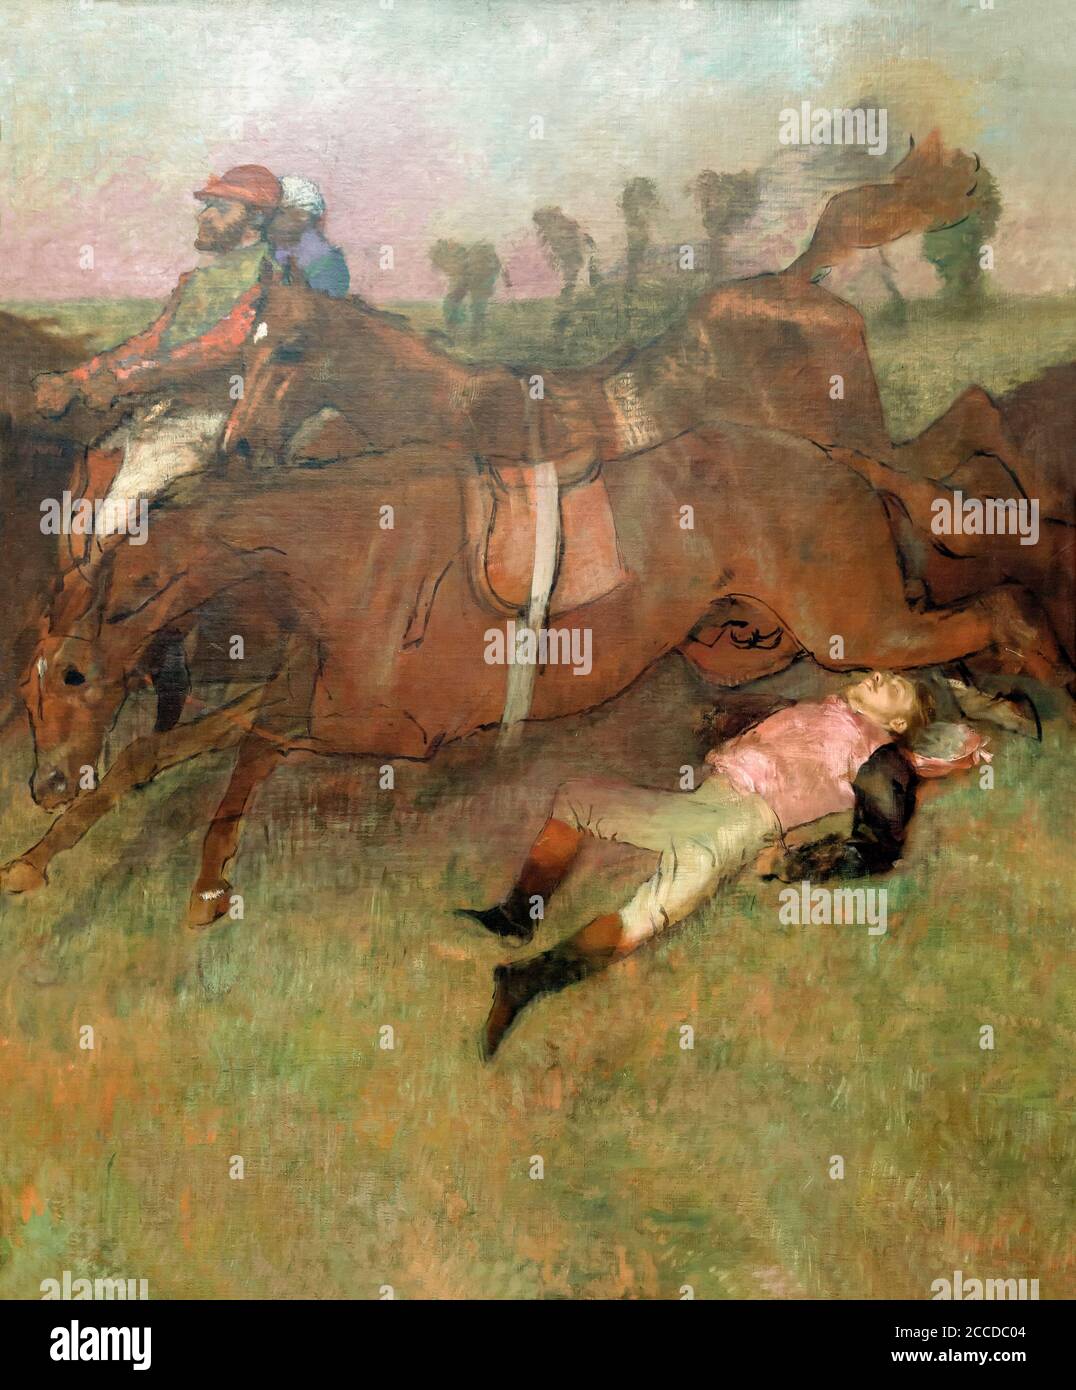 Scene from the Steeplechase, The Fallen Jockey, Edgar Degas, 1866-1897, National Gallery of Art, Washington DC, USA, North America Stock Photo